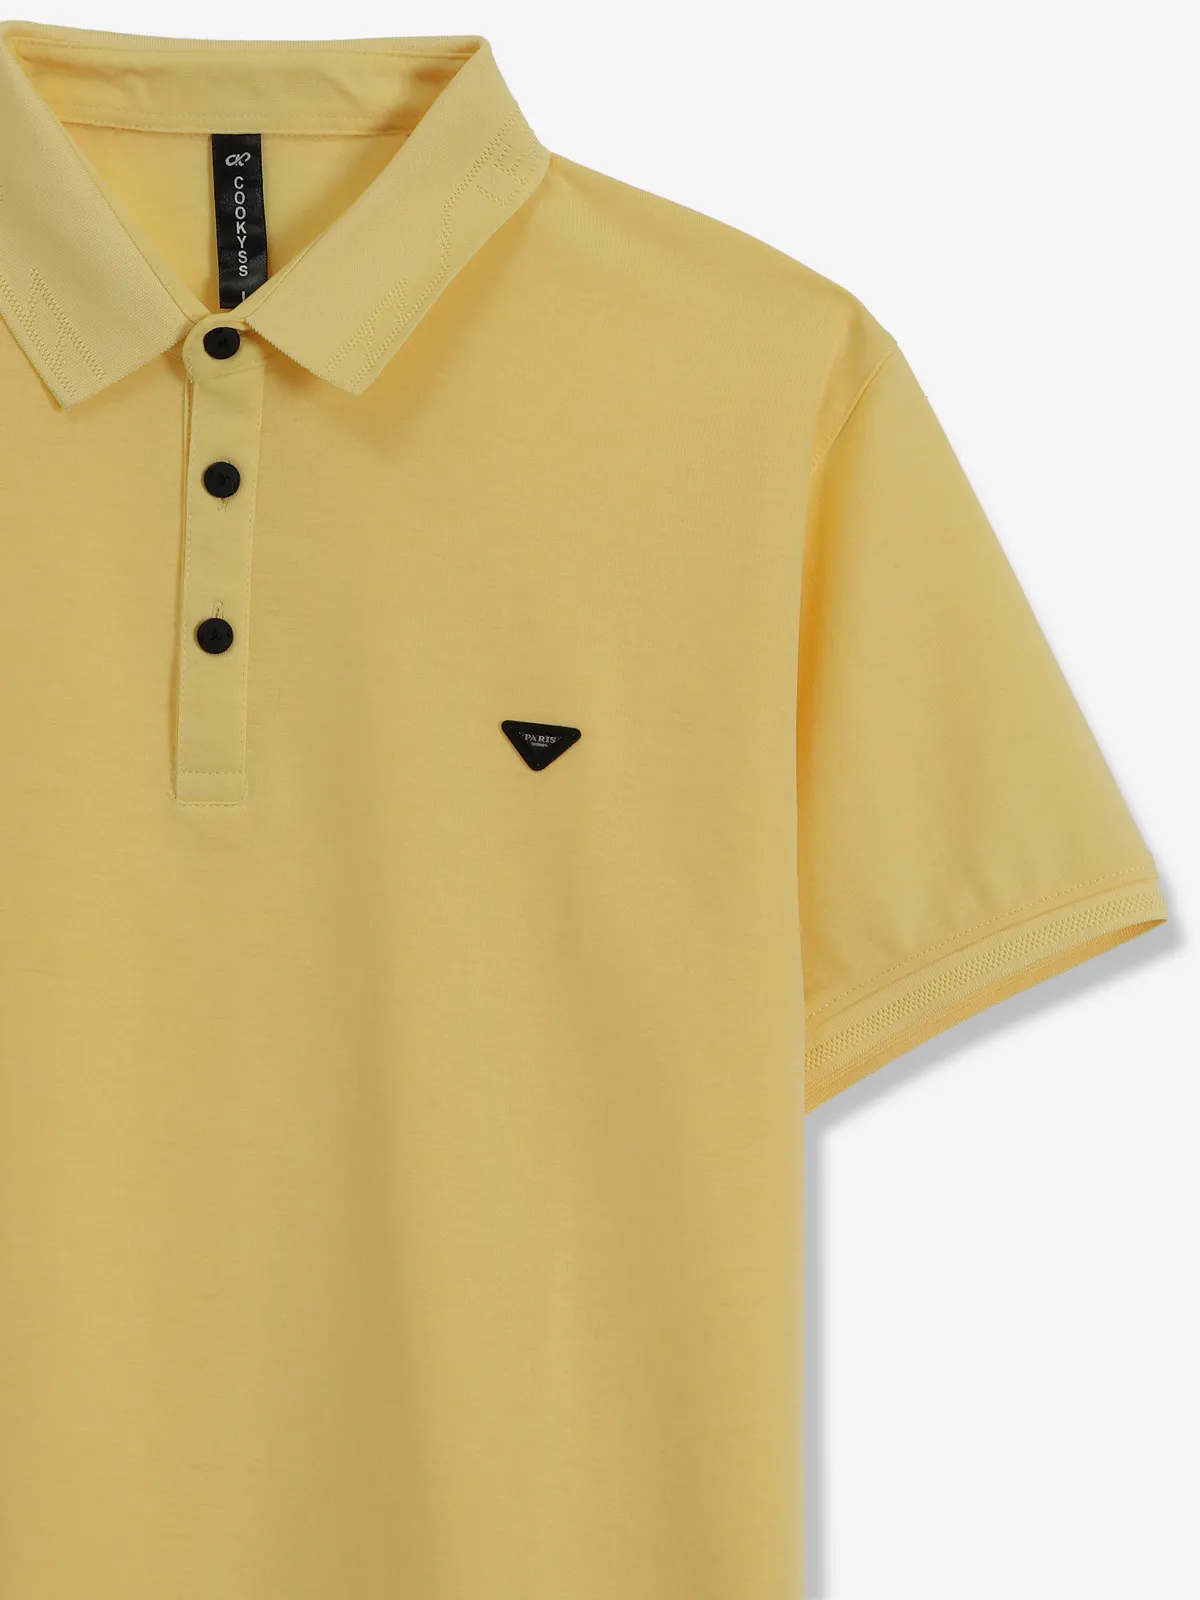 COOKYSS palin yellow cotton t-shirt